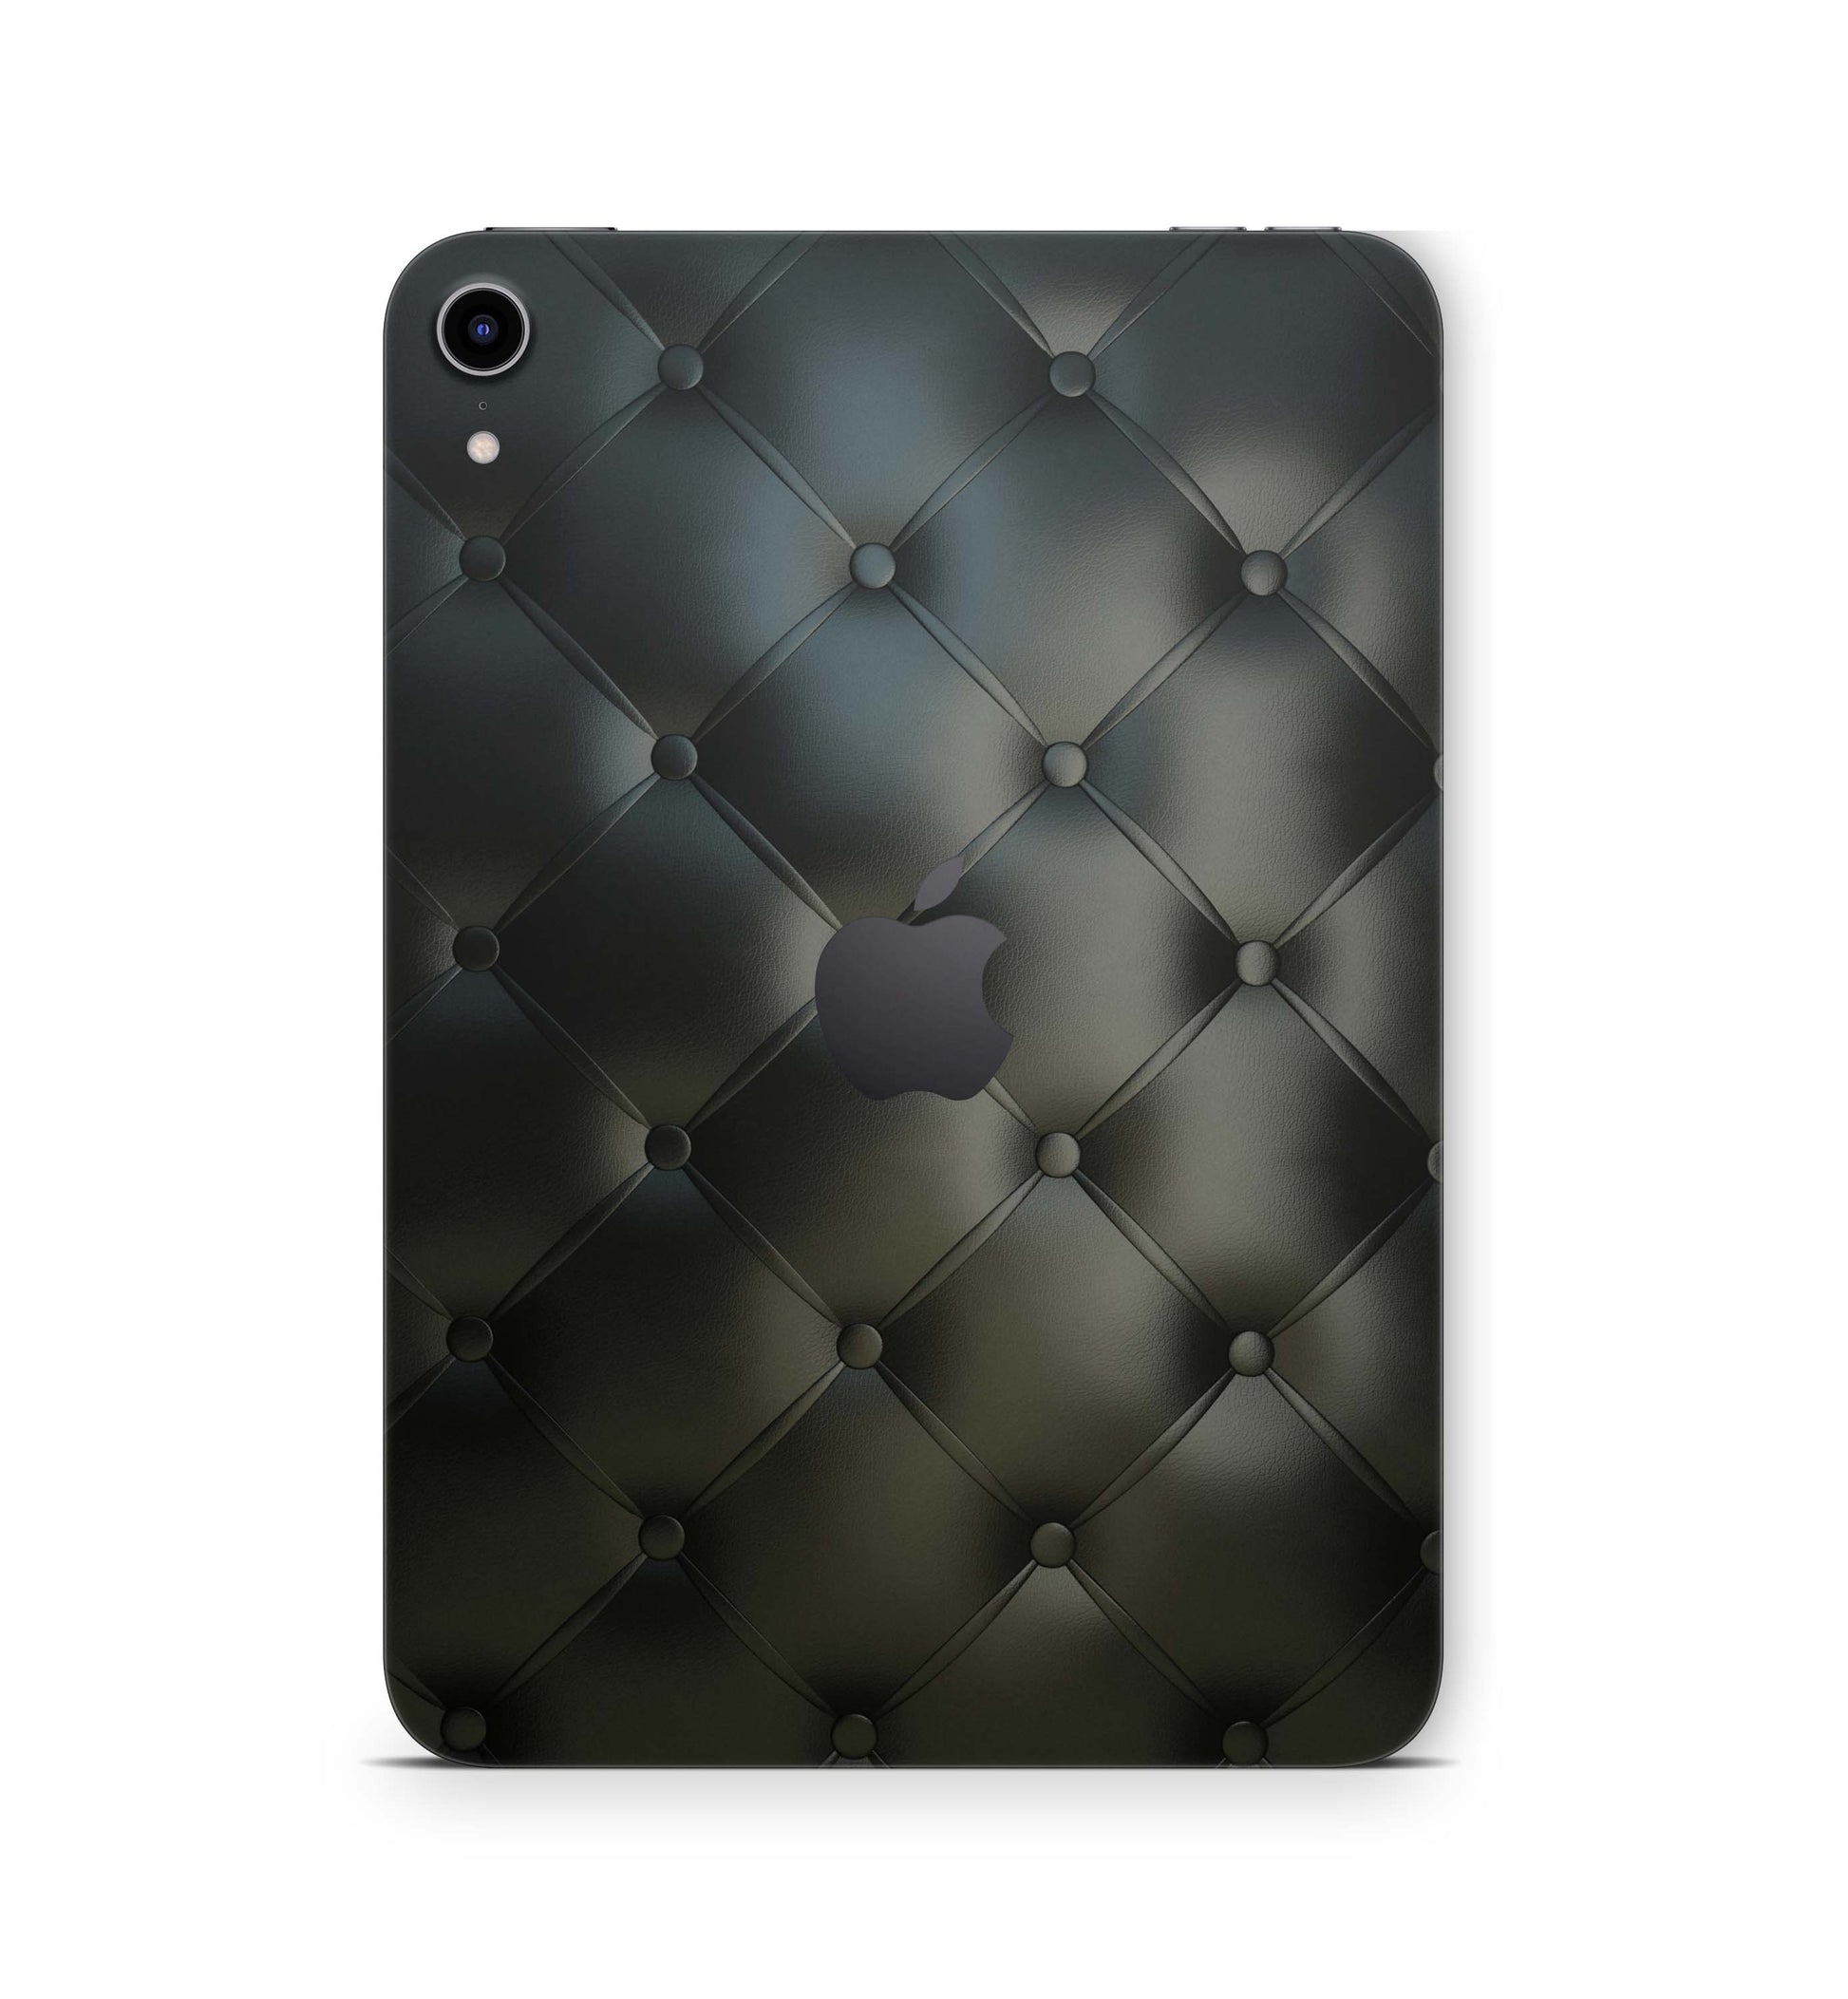 iPad Air Skin Design Cover Folie Vinyl Skins & Wraps für alle iPad Air Modelle Aufkleber Skins4u Ledersofa  